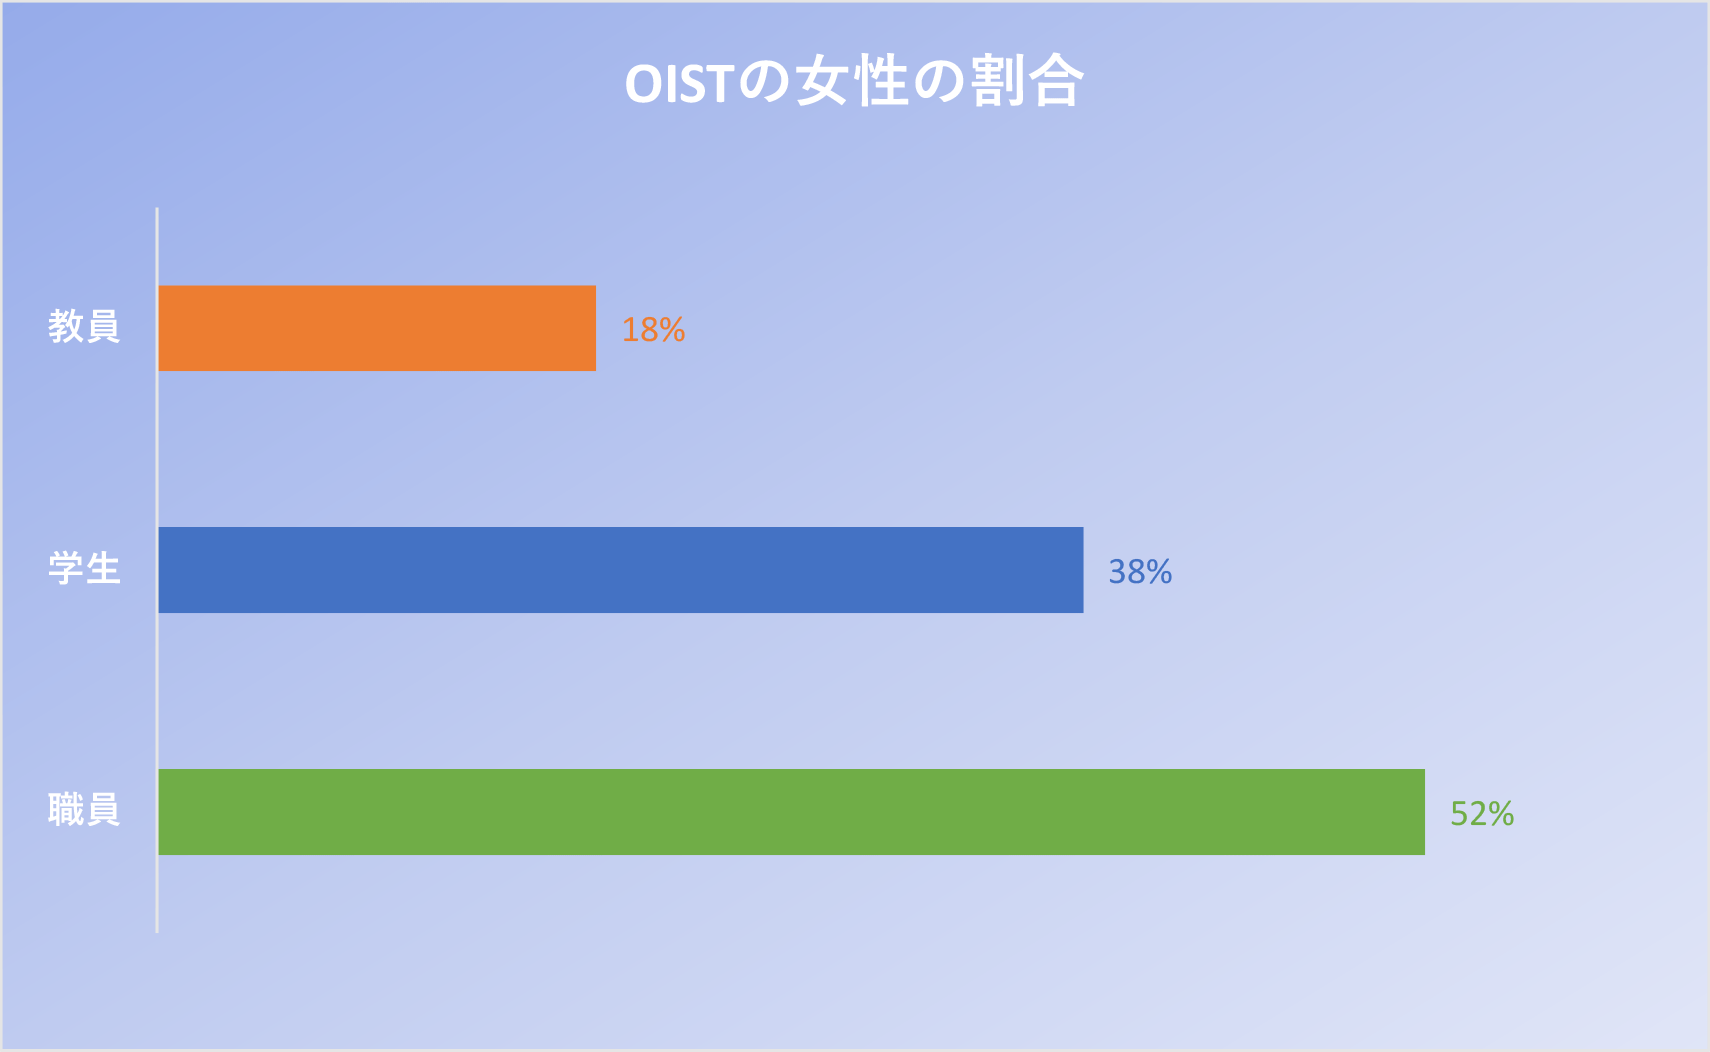 OISTの女性の割合のグラフ。教員は18%が外国人、学生は38%が外国人、職員は52%が外国人です。